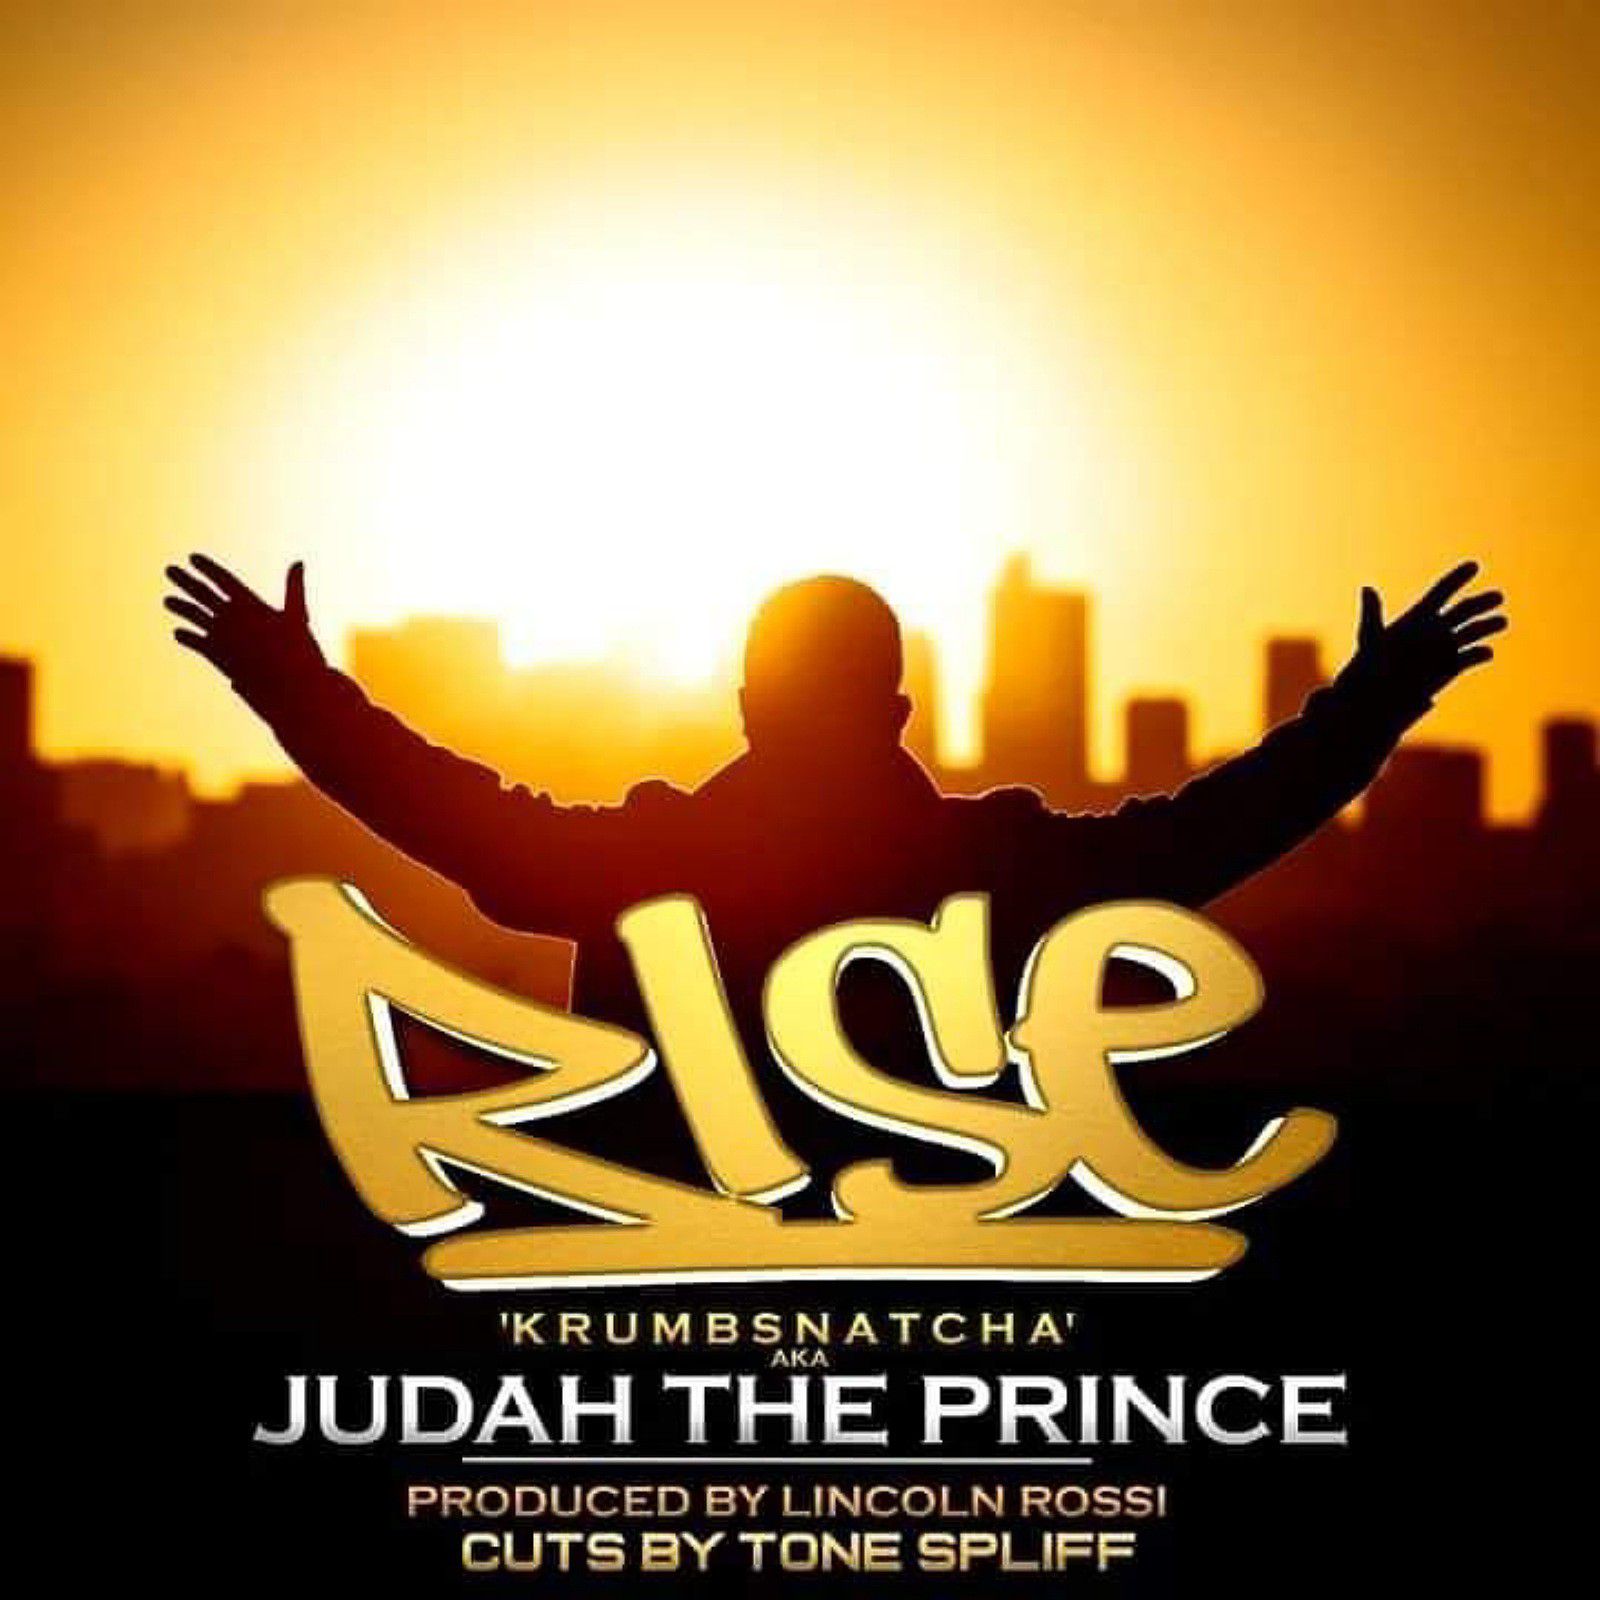 Judah The Prince (Krumbsnatcha) feat. Tone Spliff "Rise" (Audio)